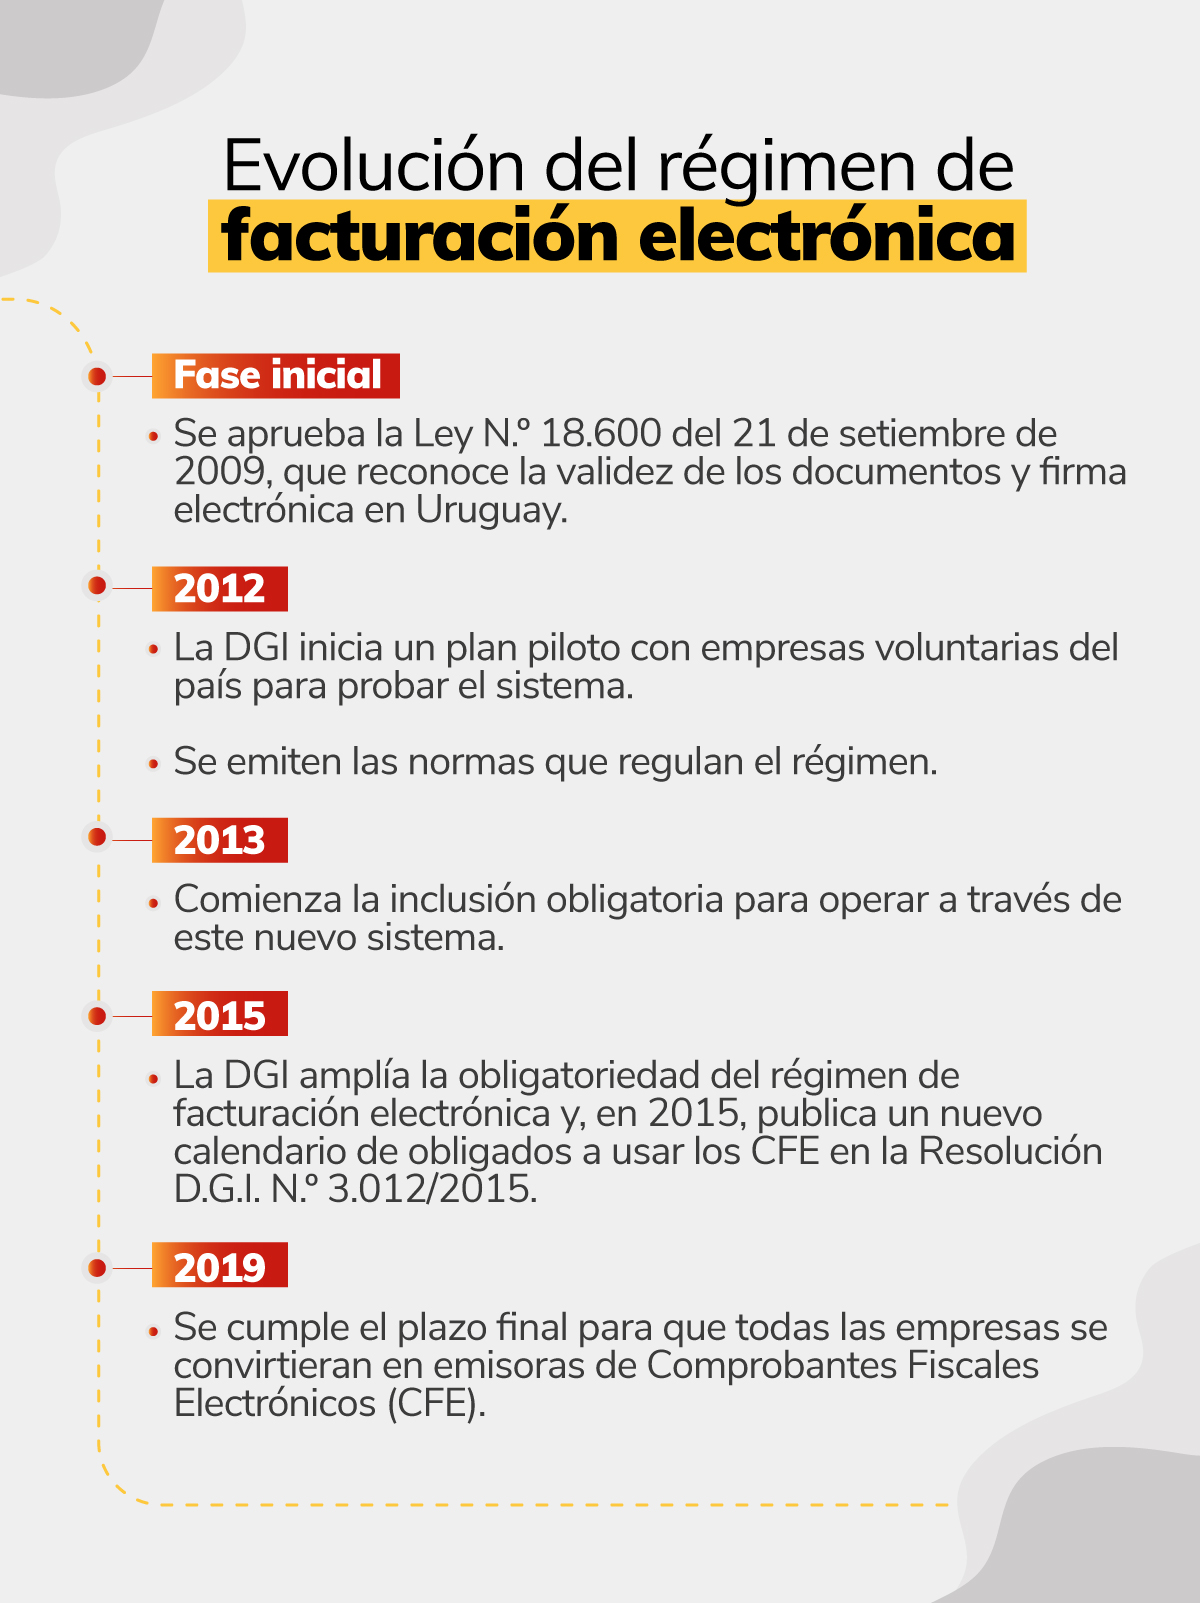 Evolución del Régimen de Facturación Electrónica en Uruguay